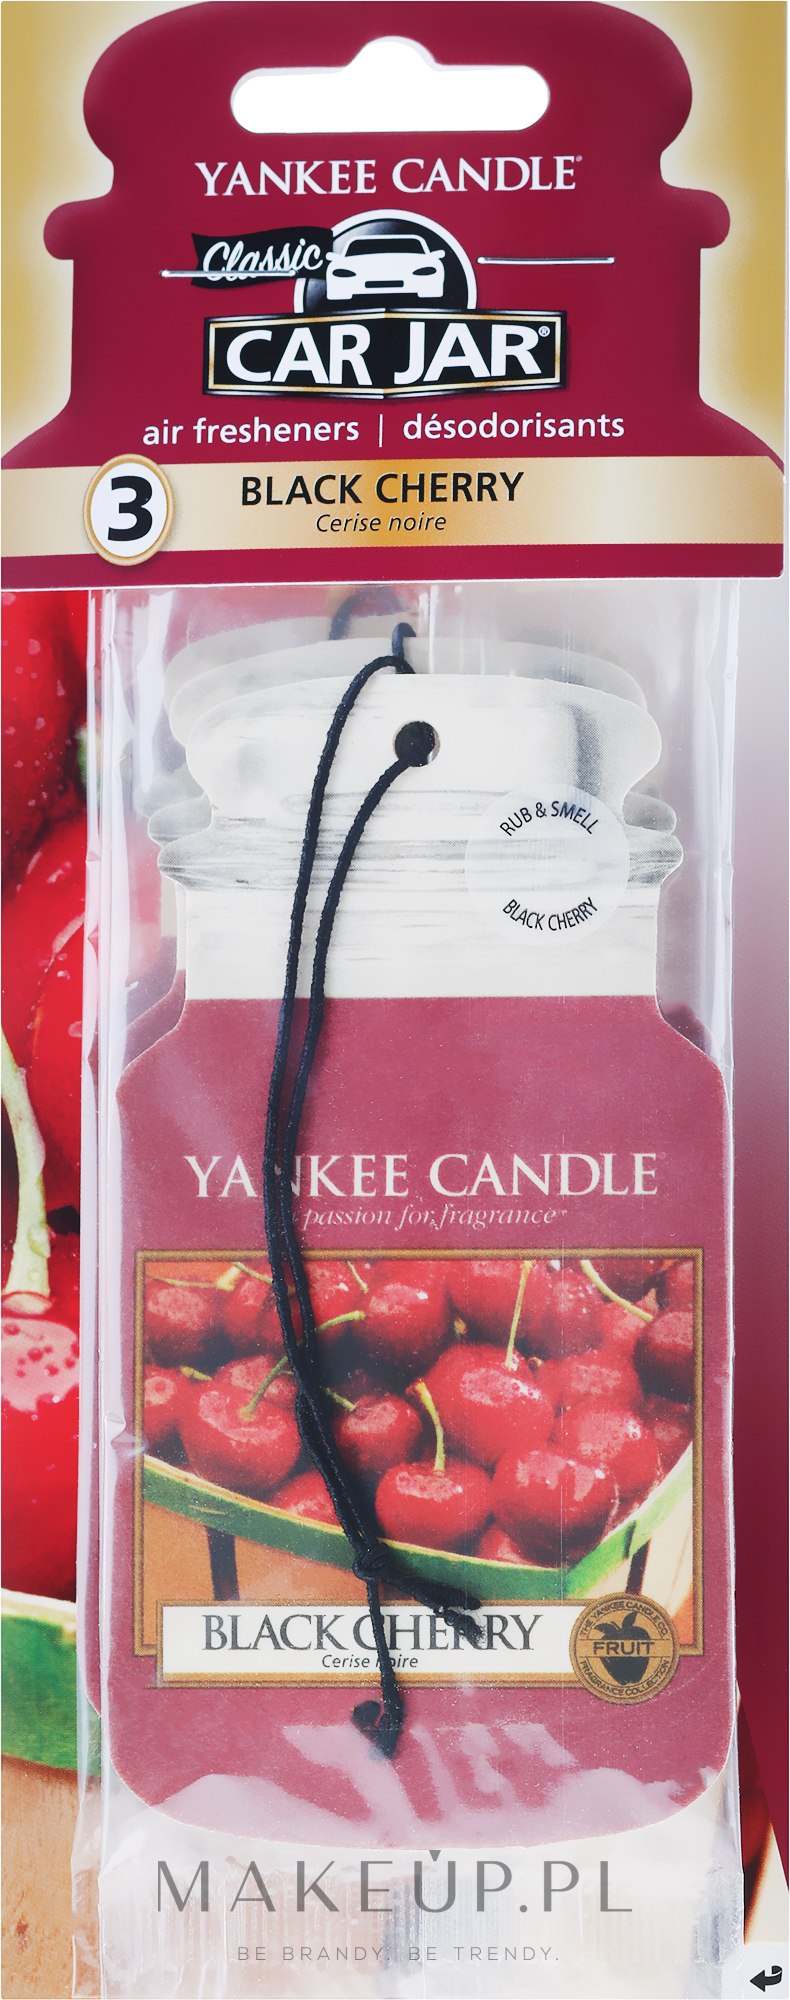 Yankee Candle Car Jar Black Cherry - Zapach do samochodu